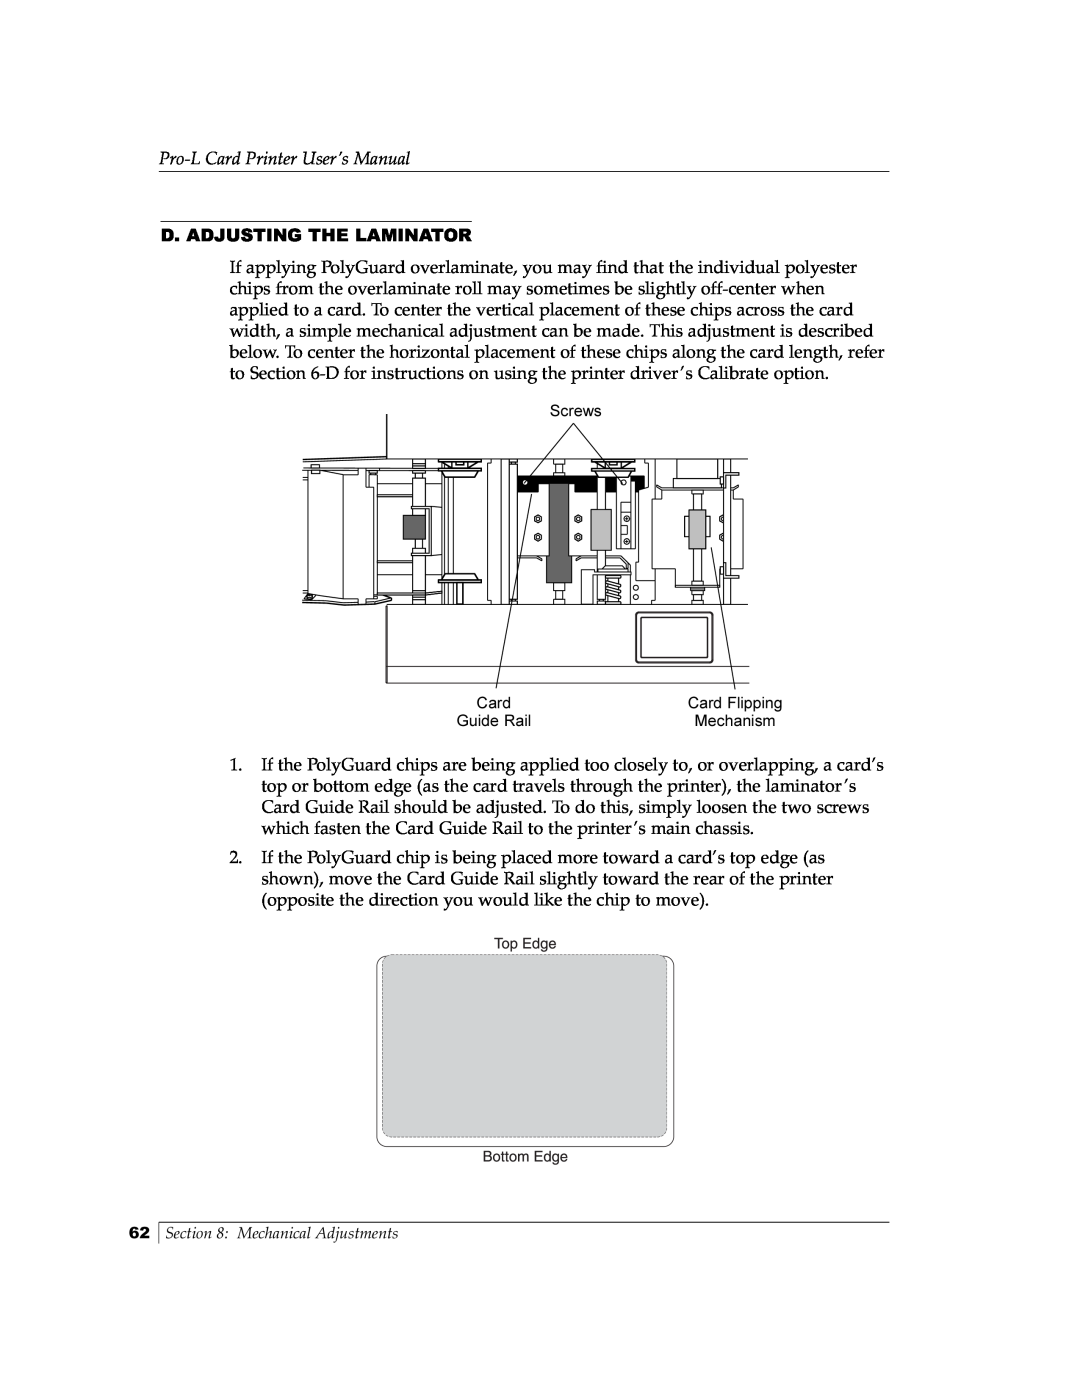 FARGO electronic Pro-L manual D. Adjusting The Laminator 